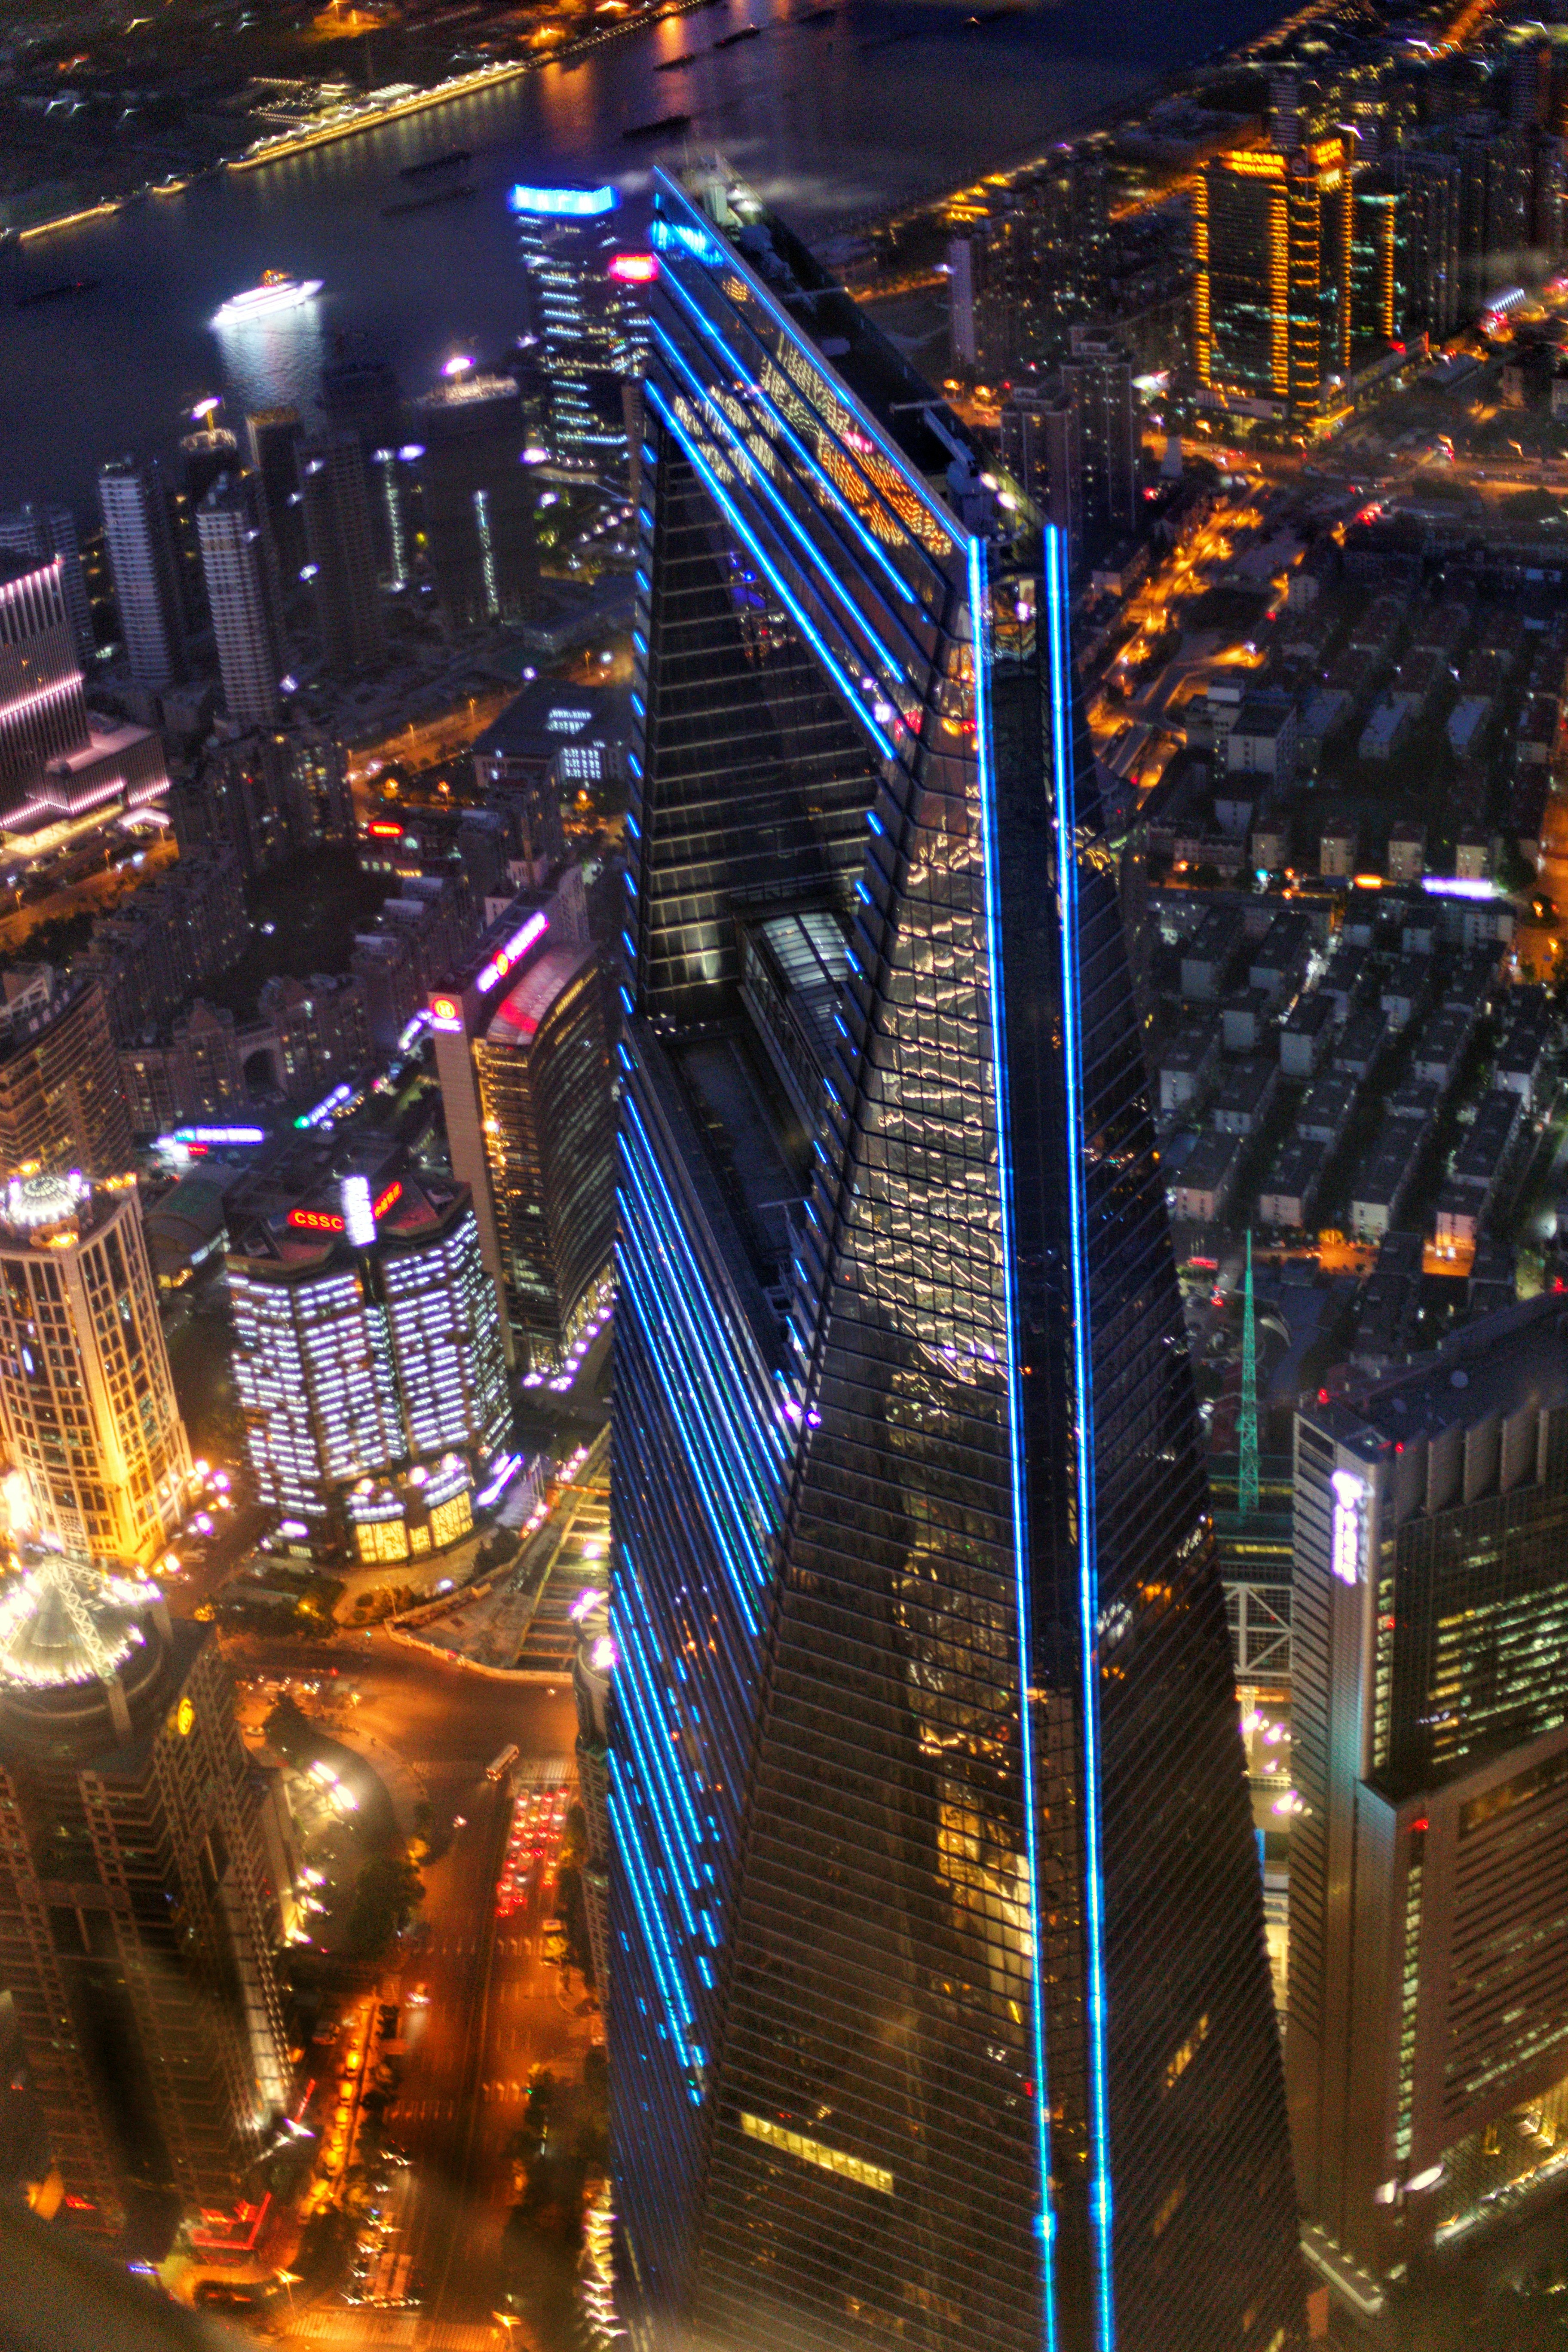 Shanghai world financial center at night, seen from Shanghai Tower